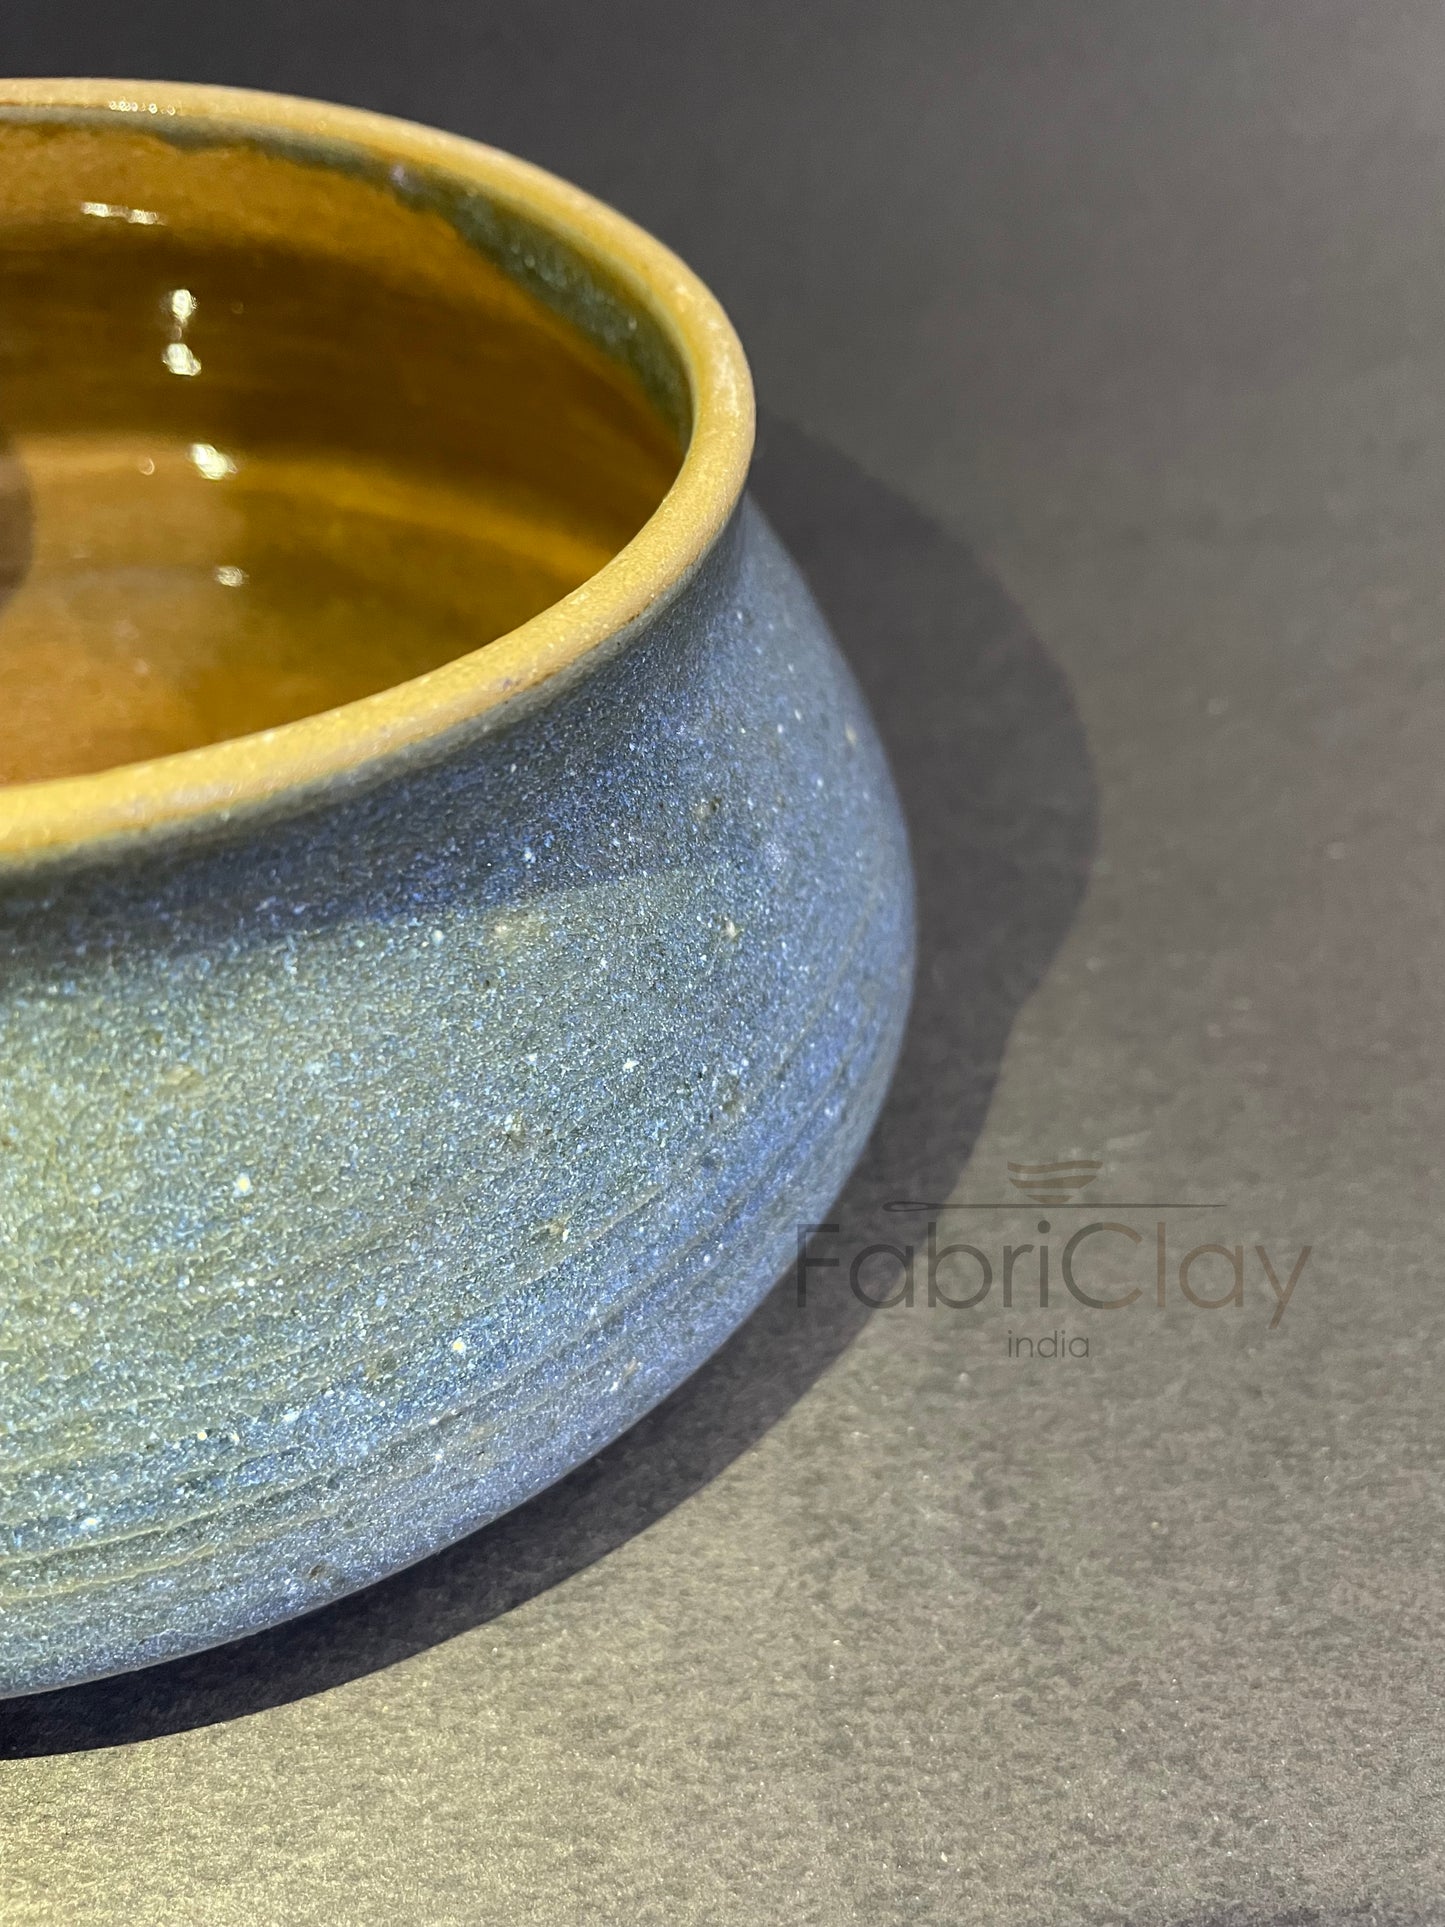 Small ceramic tableware